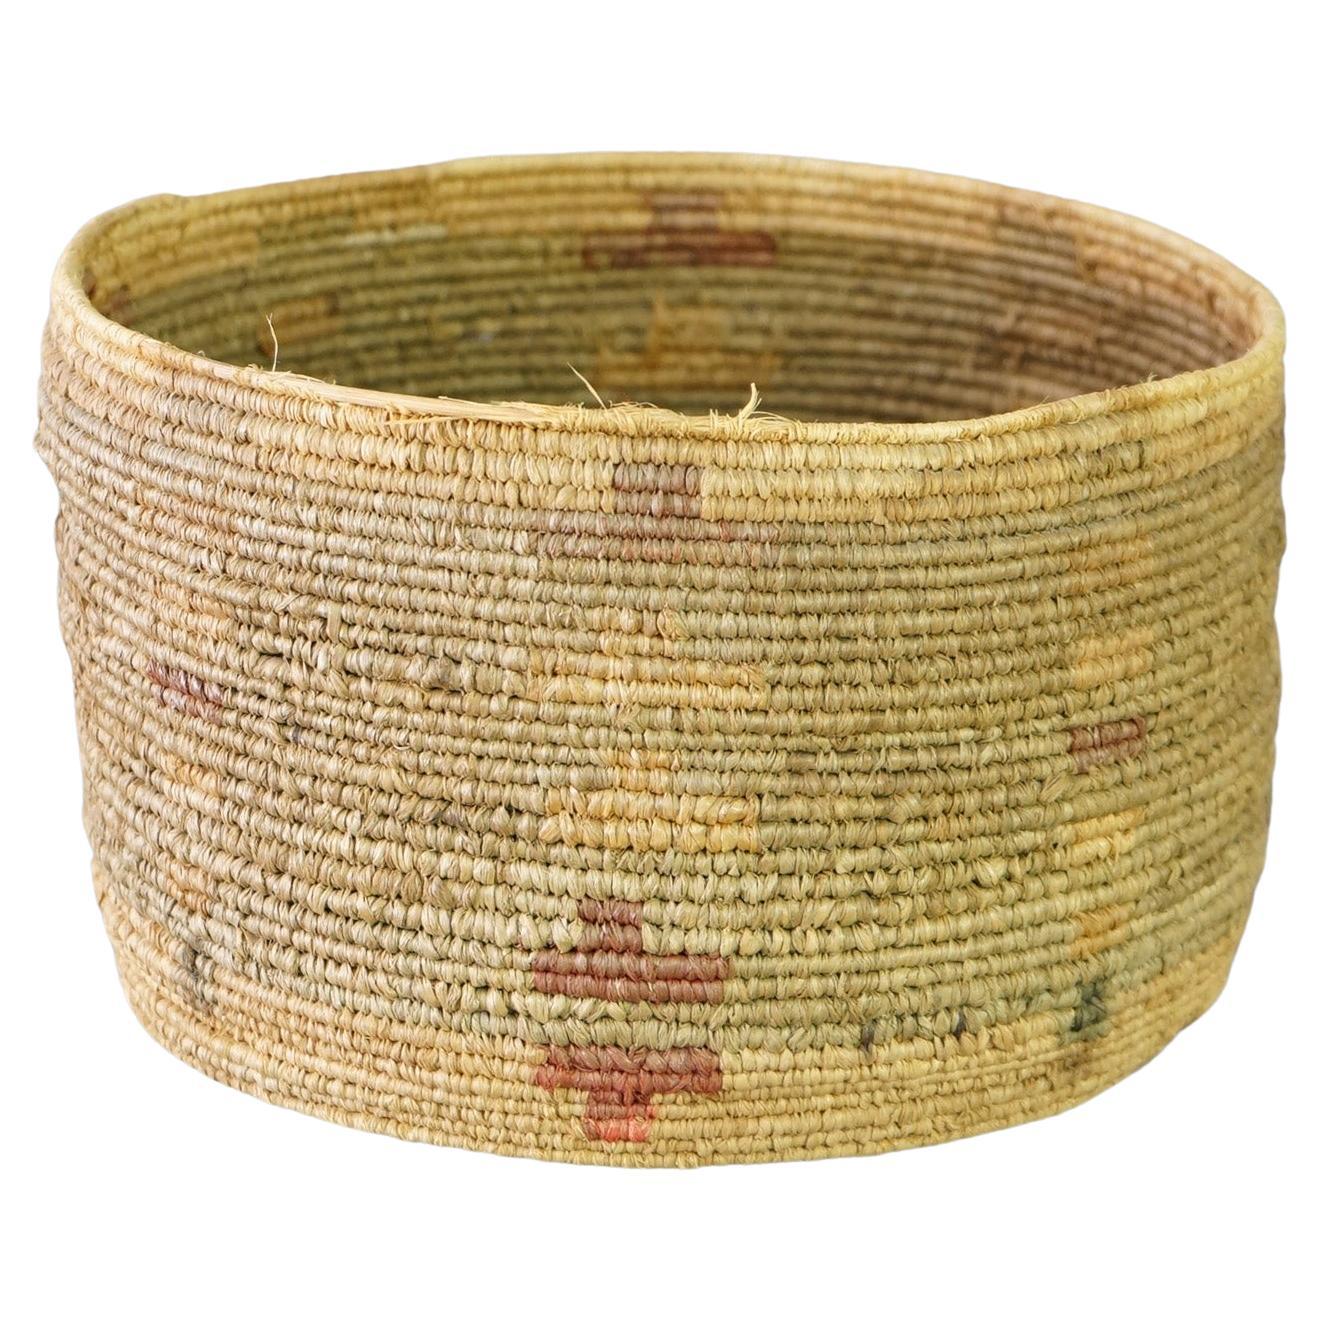 An antique Southwestern Native American Indian Navajo Pima Woven Polychrome Basket Circa 1920

Measures - 9